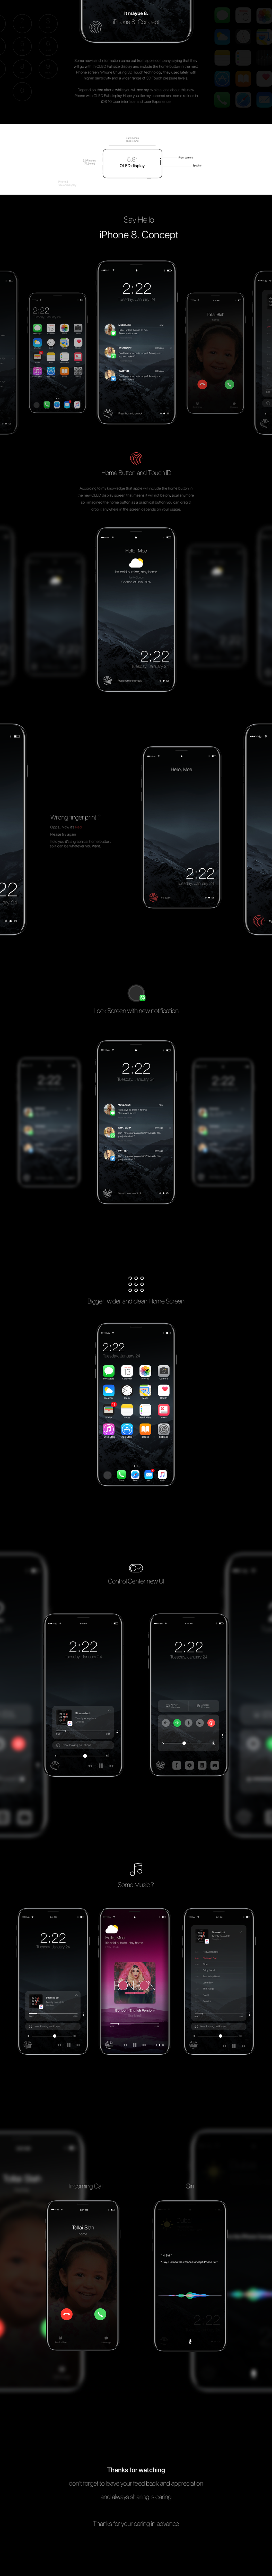 iphone-8-concept-dark-mode